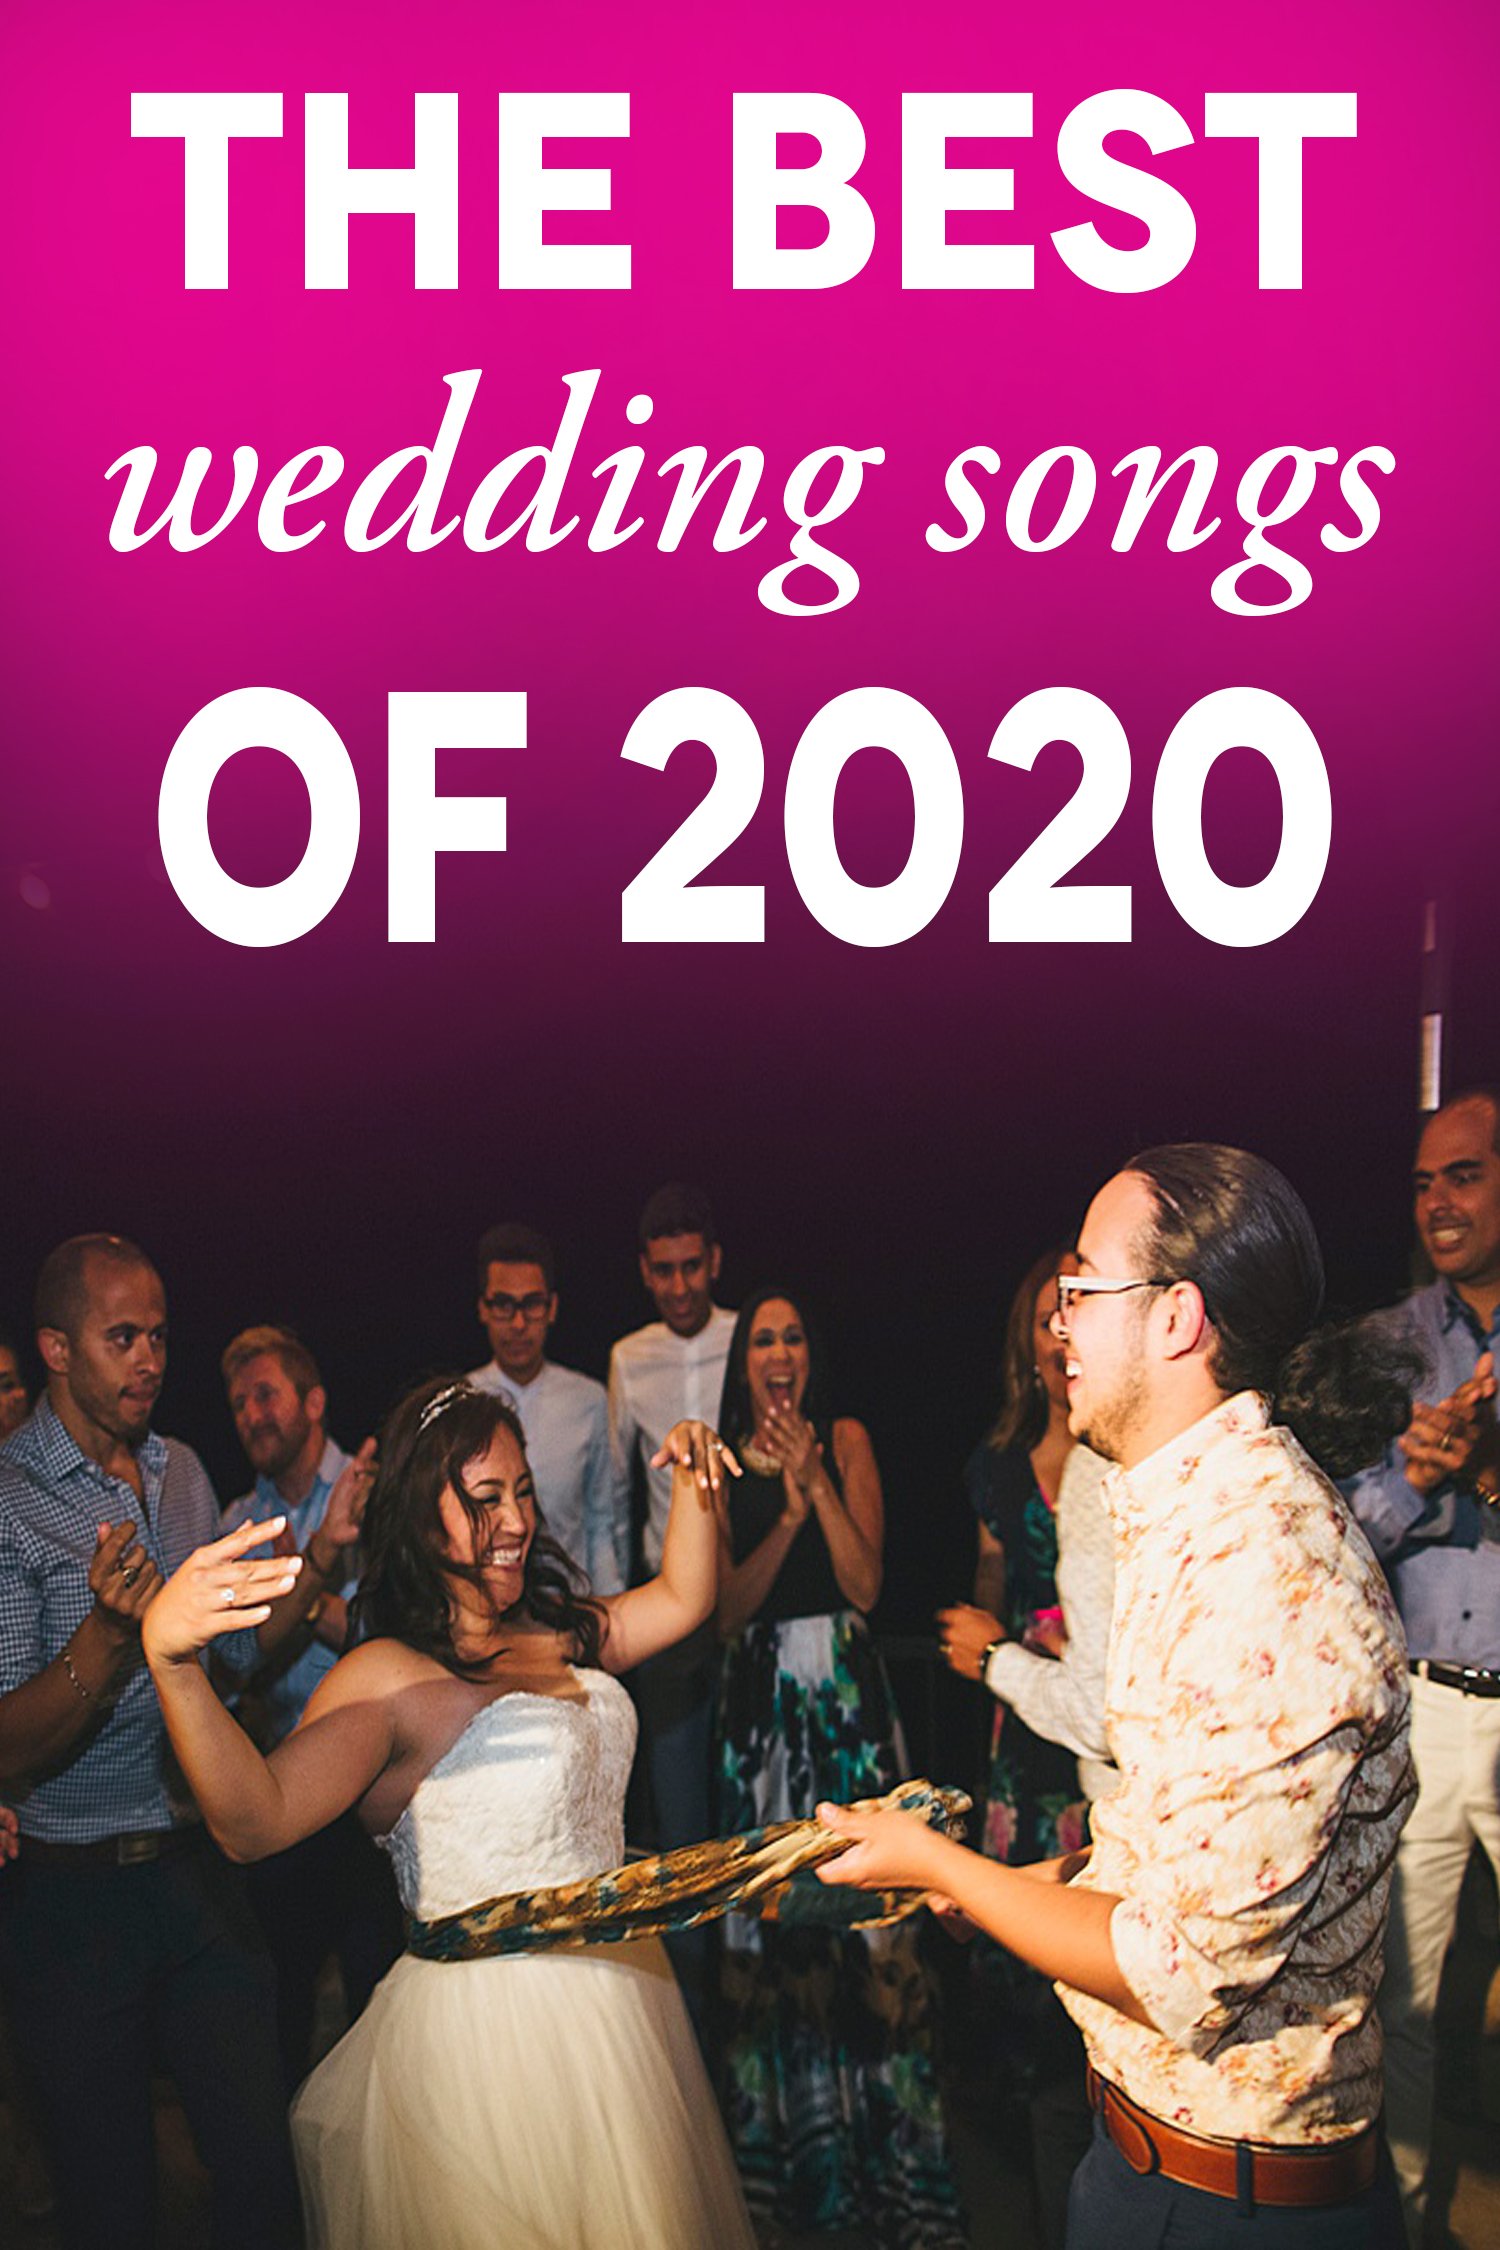 The best wedding songs 2020